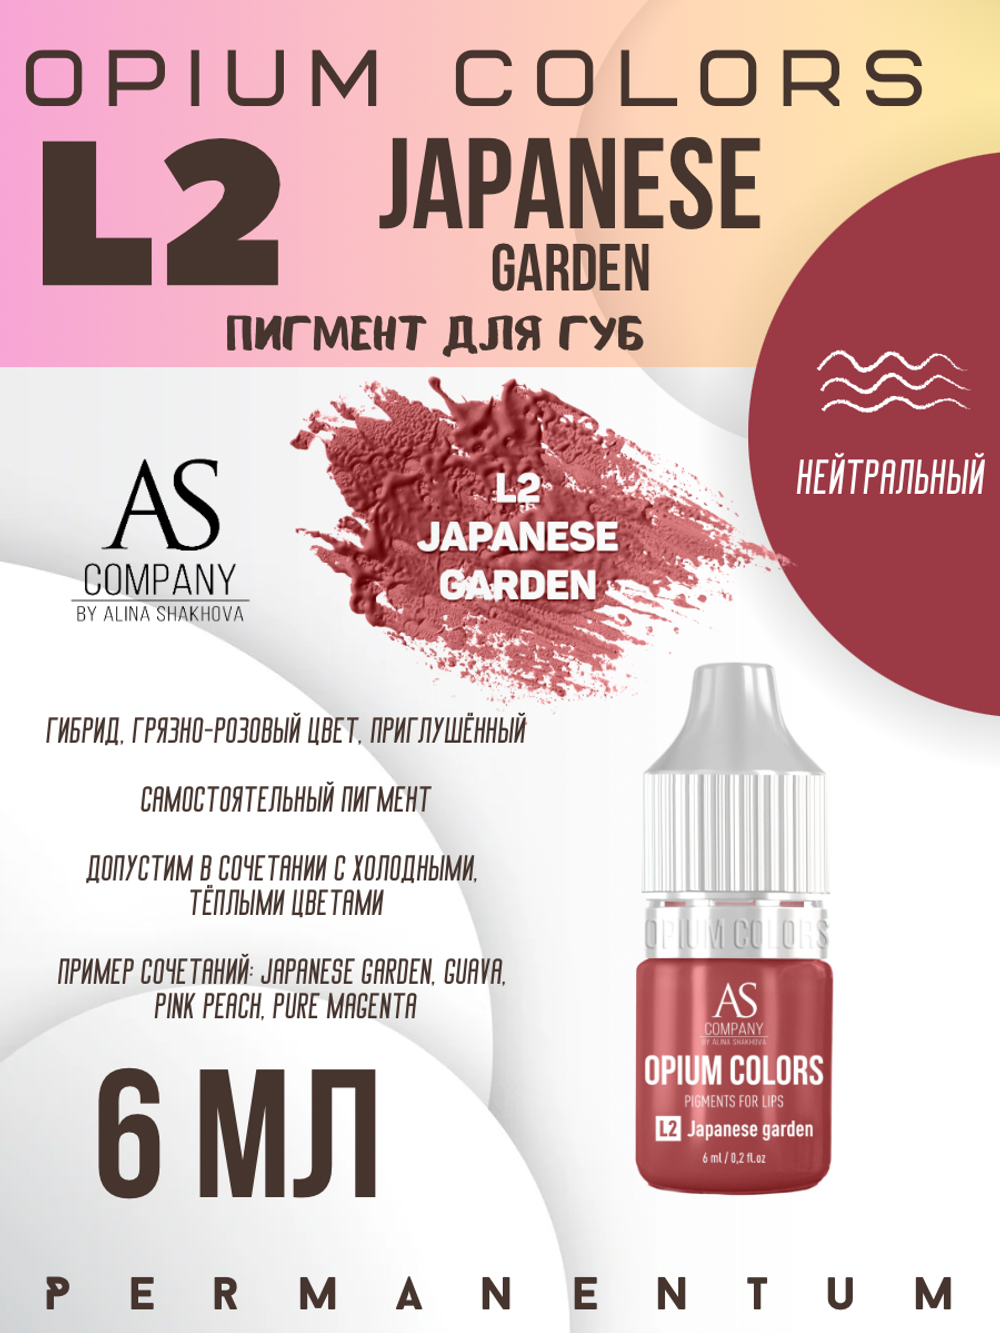 L2 JAPANESE GARDEN пигмент для губ TM AS-Company OPIUM COLORS